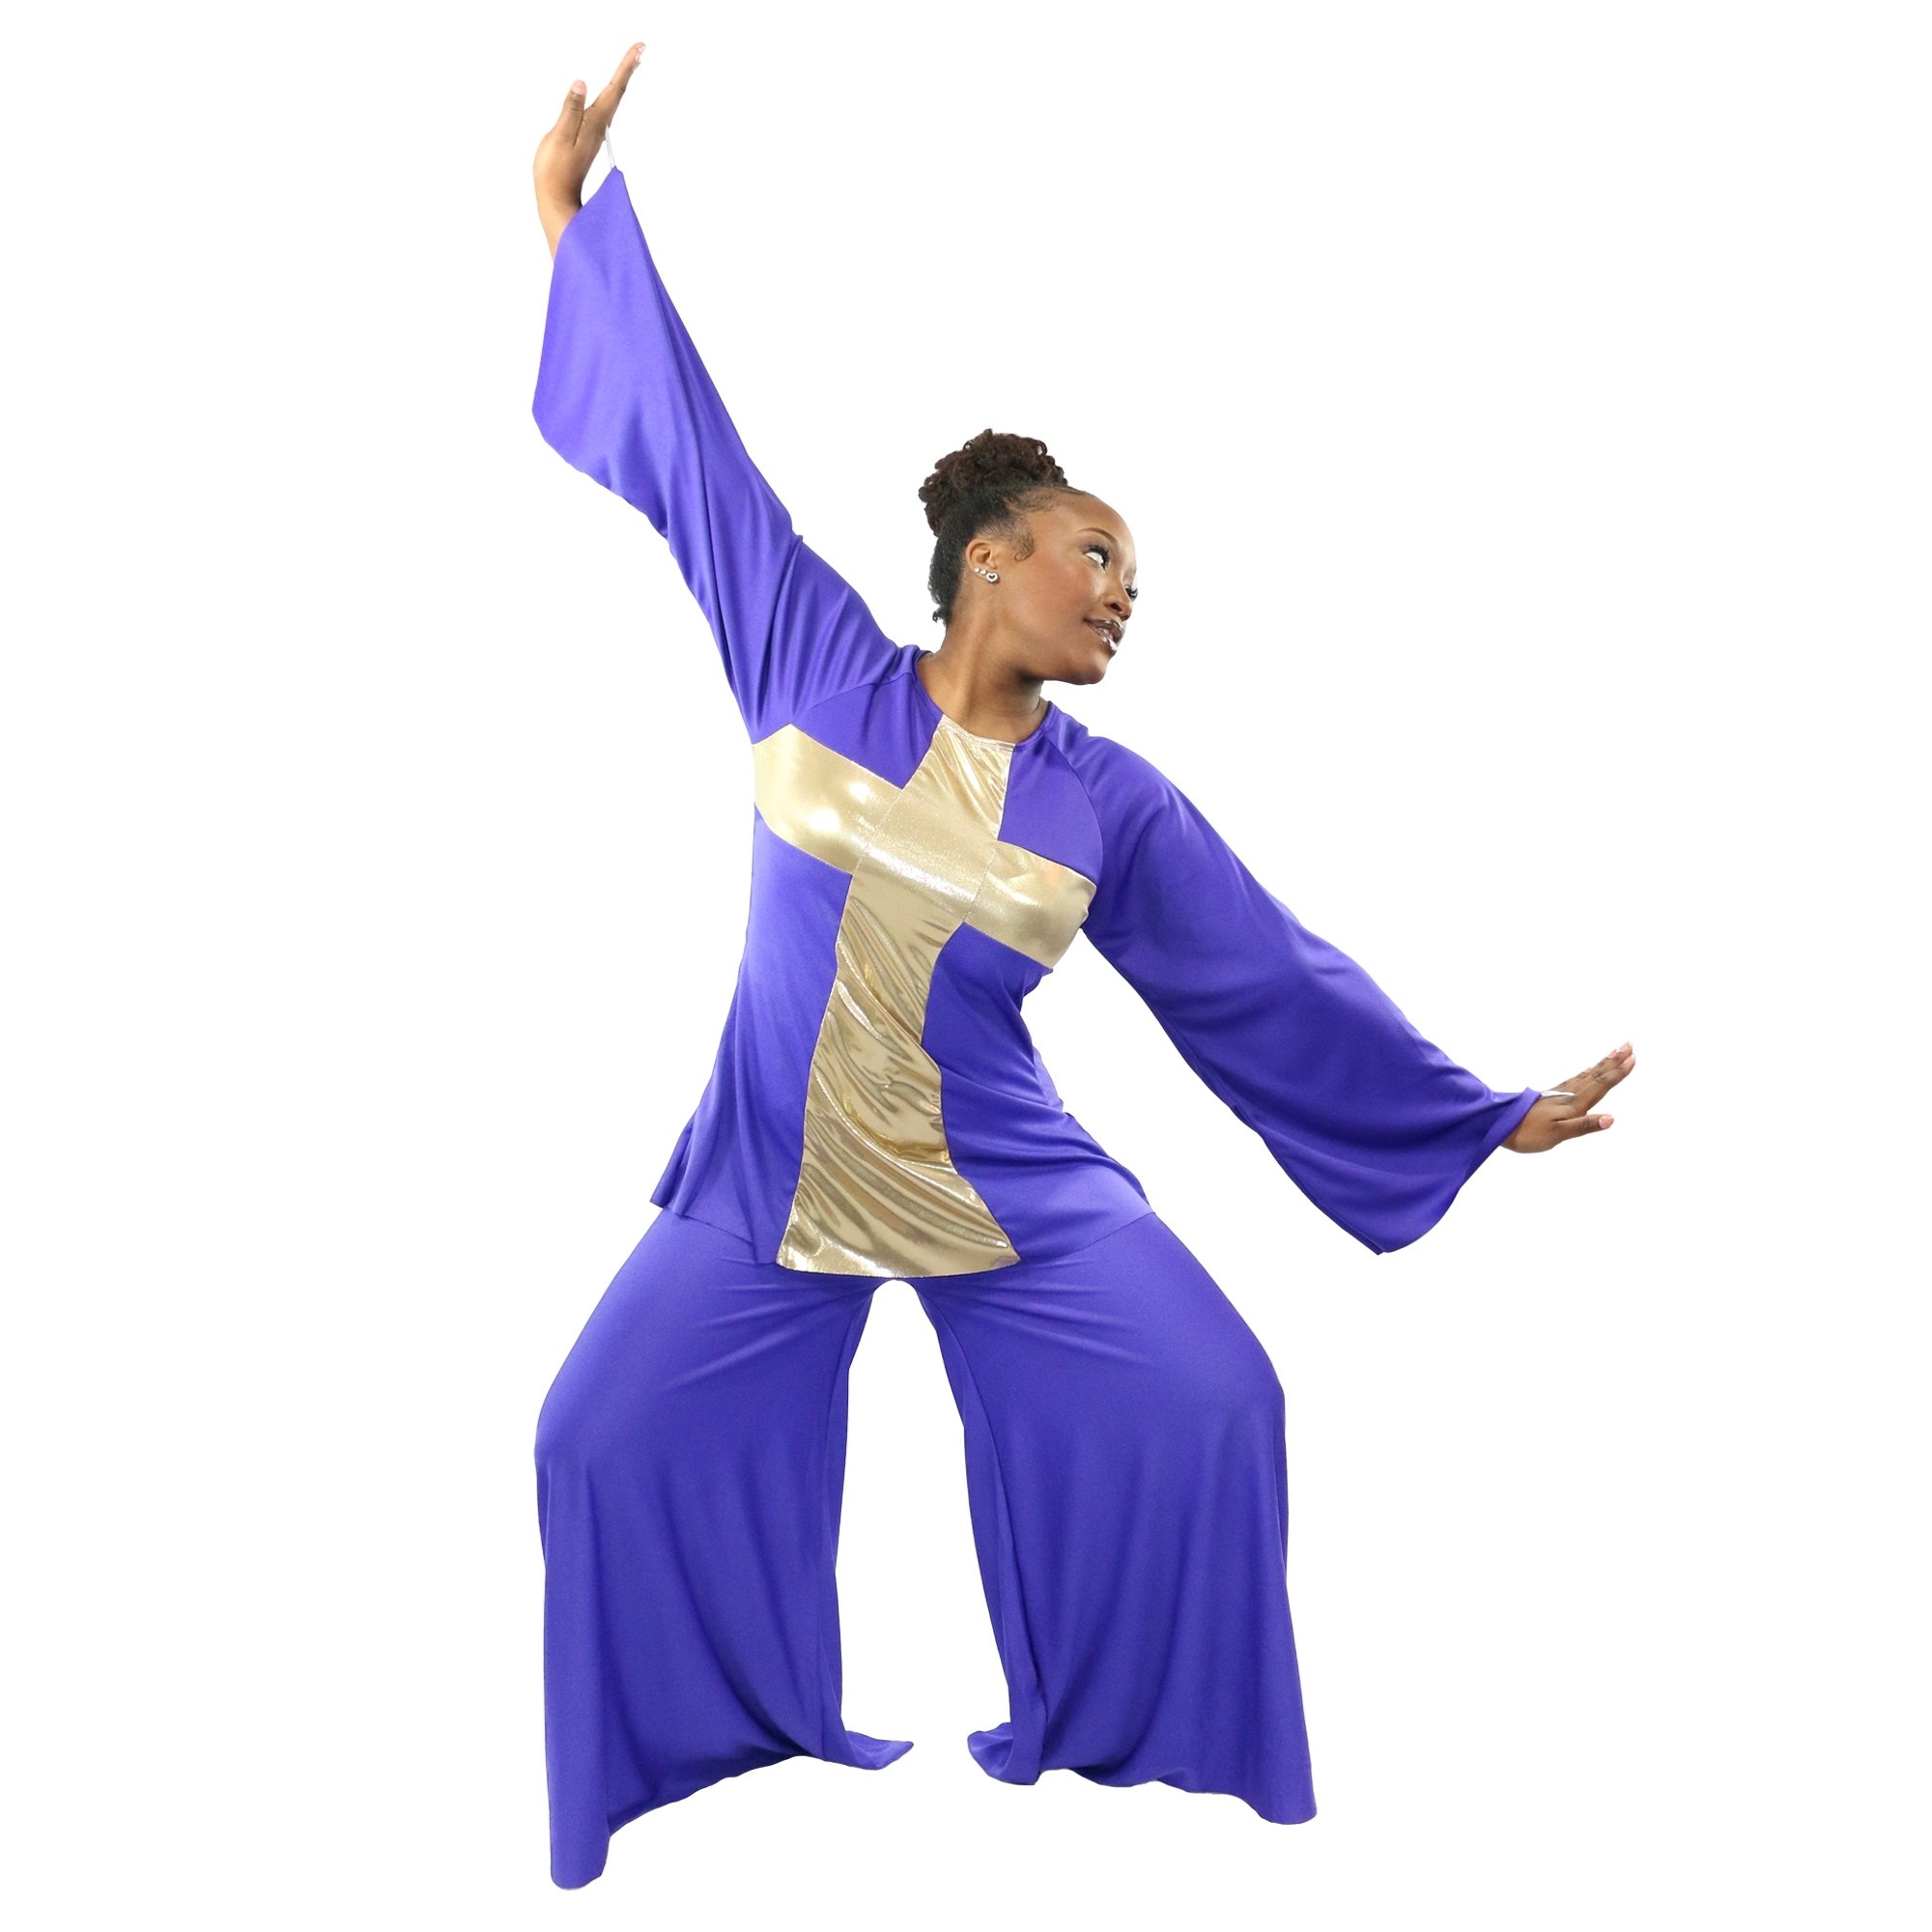 Danzcue Worship Praise Dance Cross Pullover Top - Click Image to Close